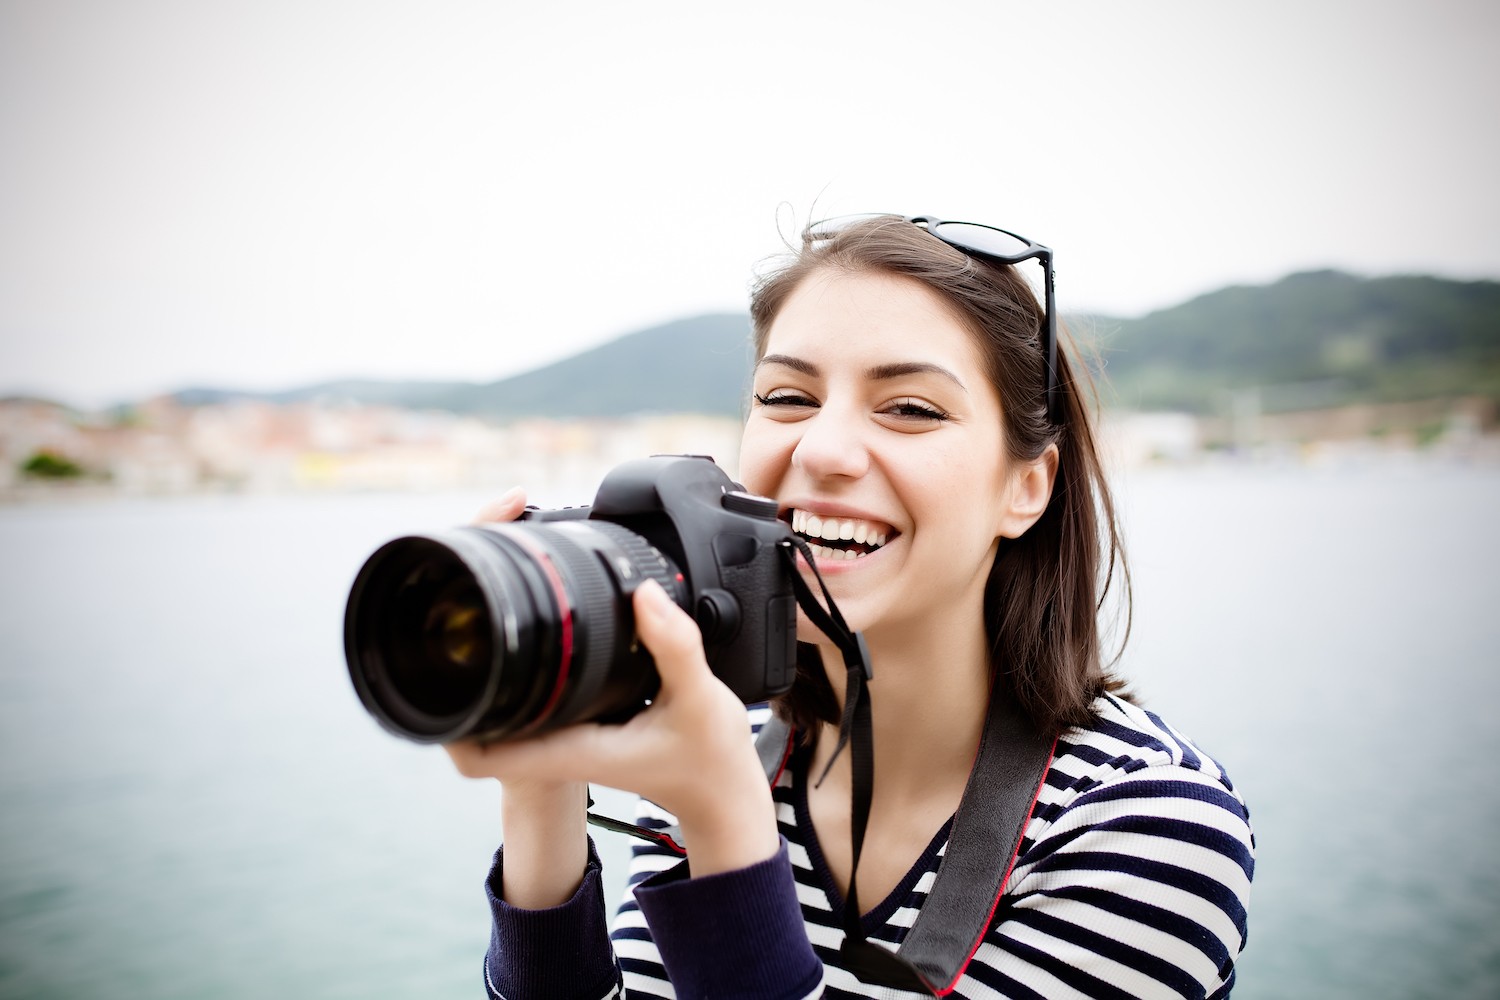 Mature woman using a camera to take photo outdoors